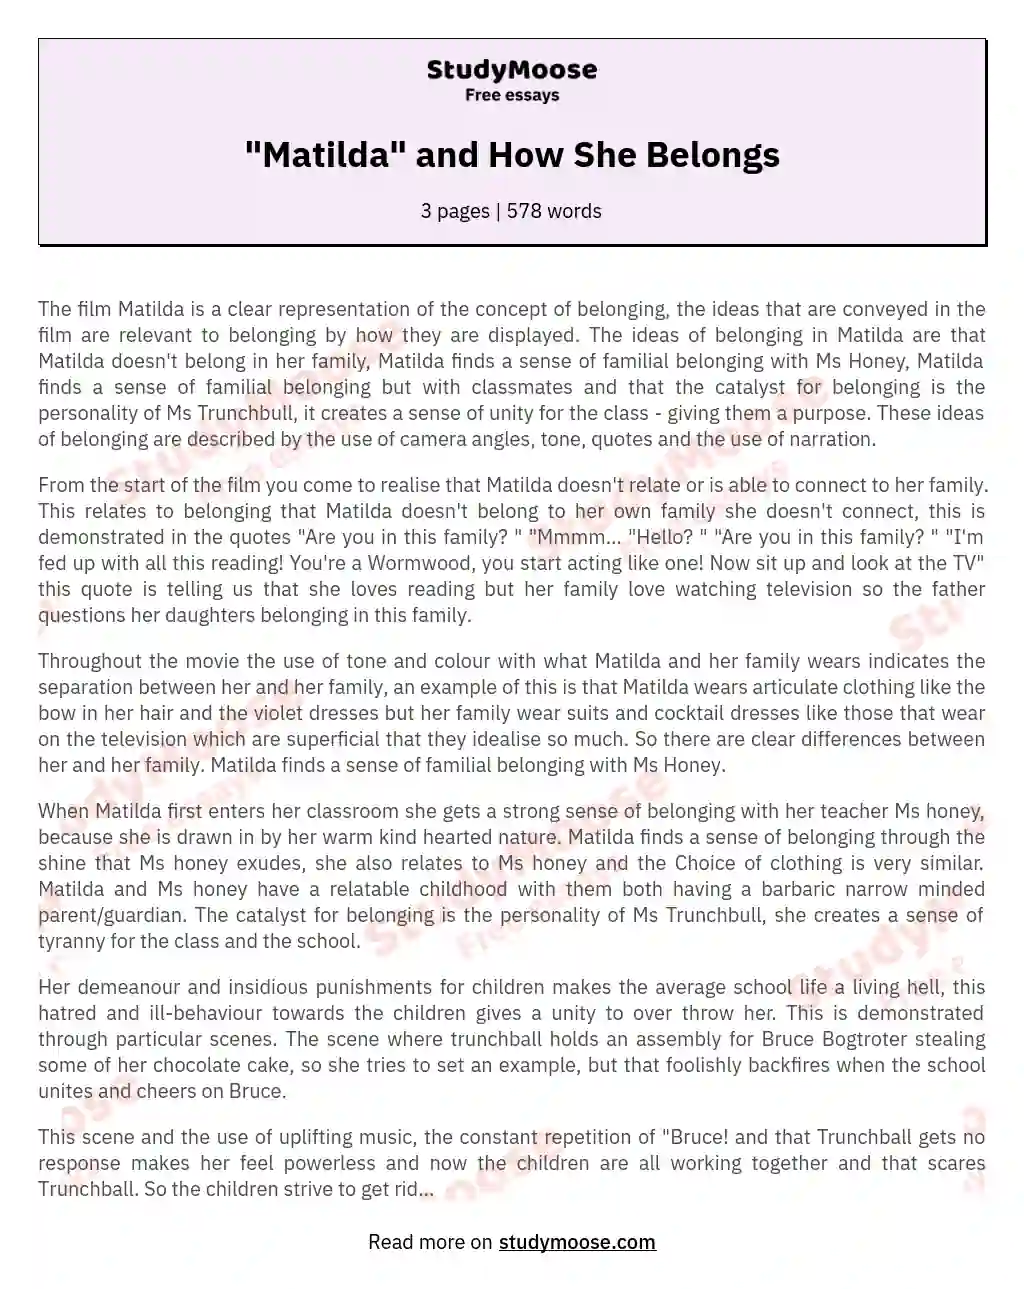 "Matilda" and How She Belongs